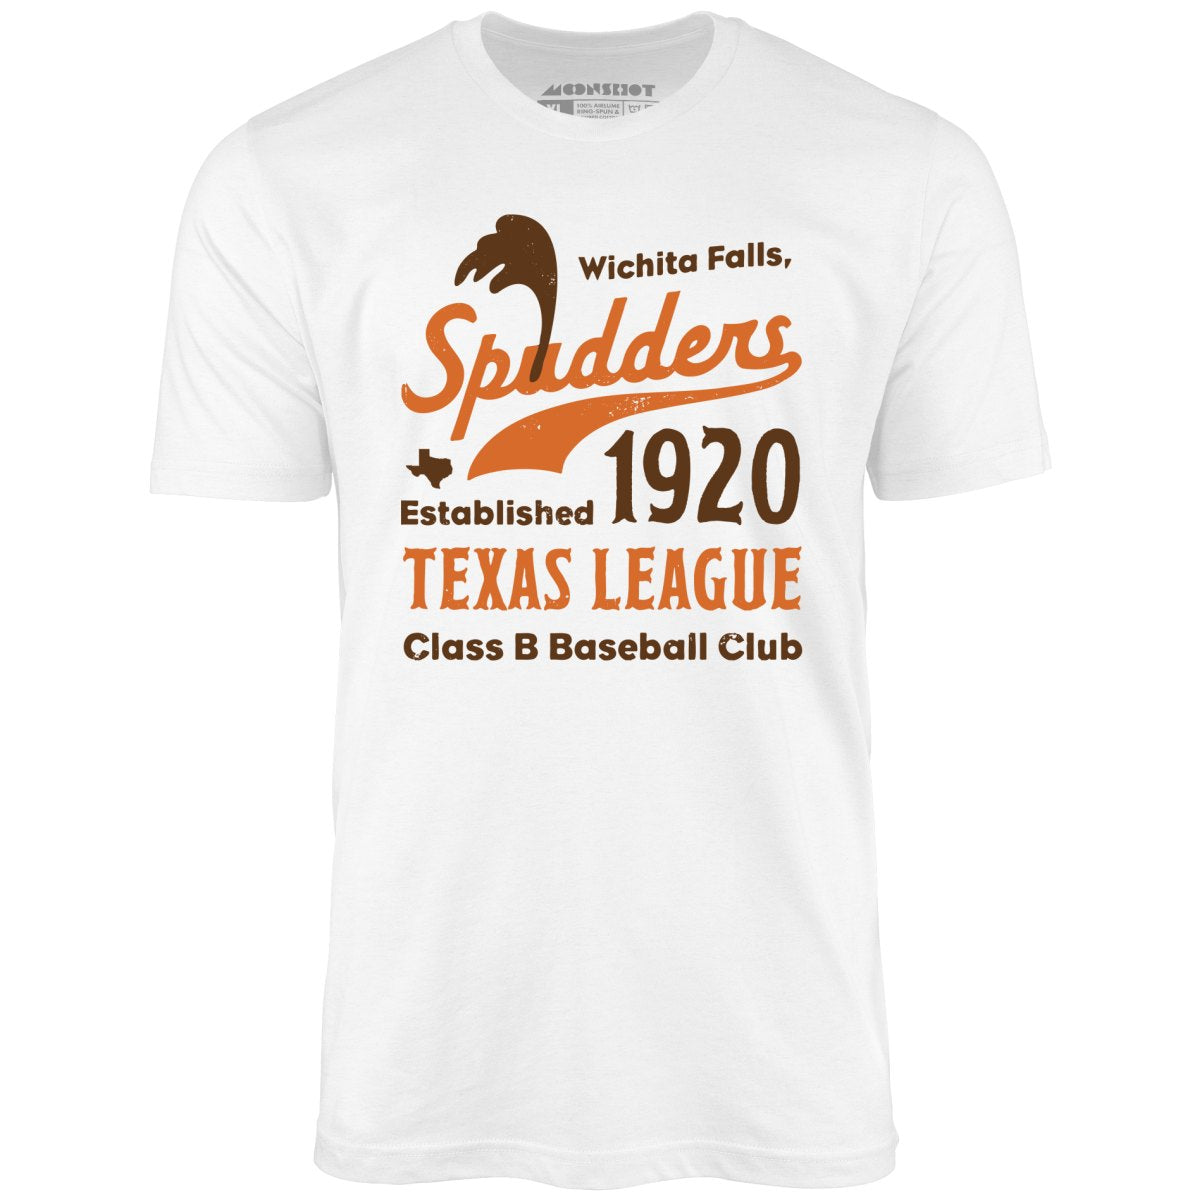 Wichita Falls Spudders - Texas - Vintage Defunct Baseball Teams - Unisex T-Shirt